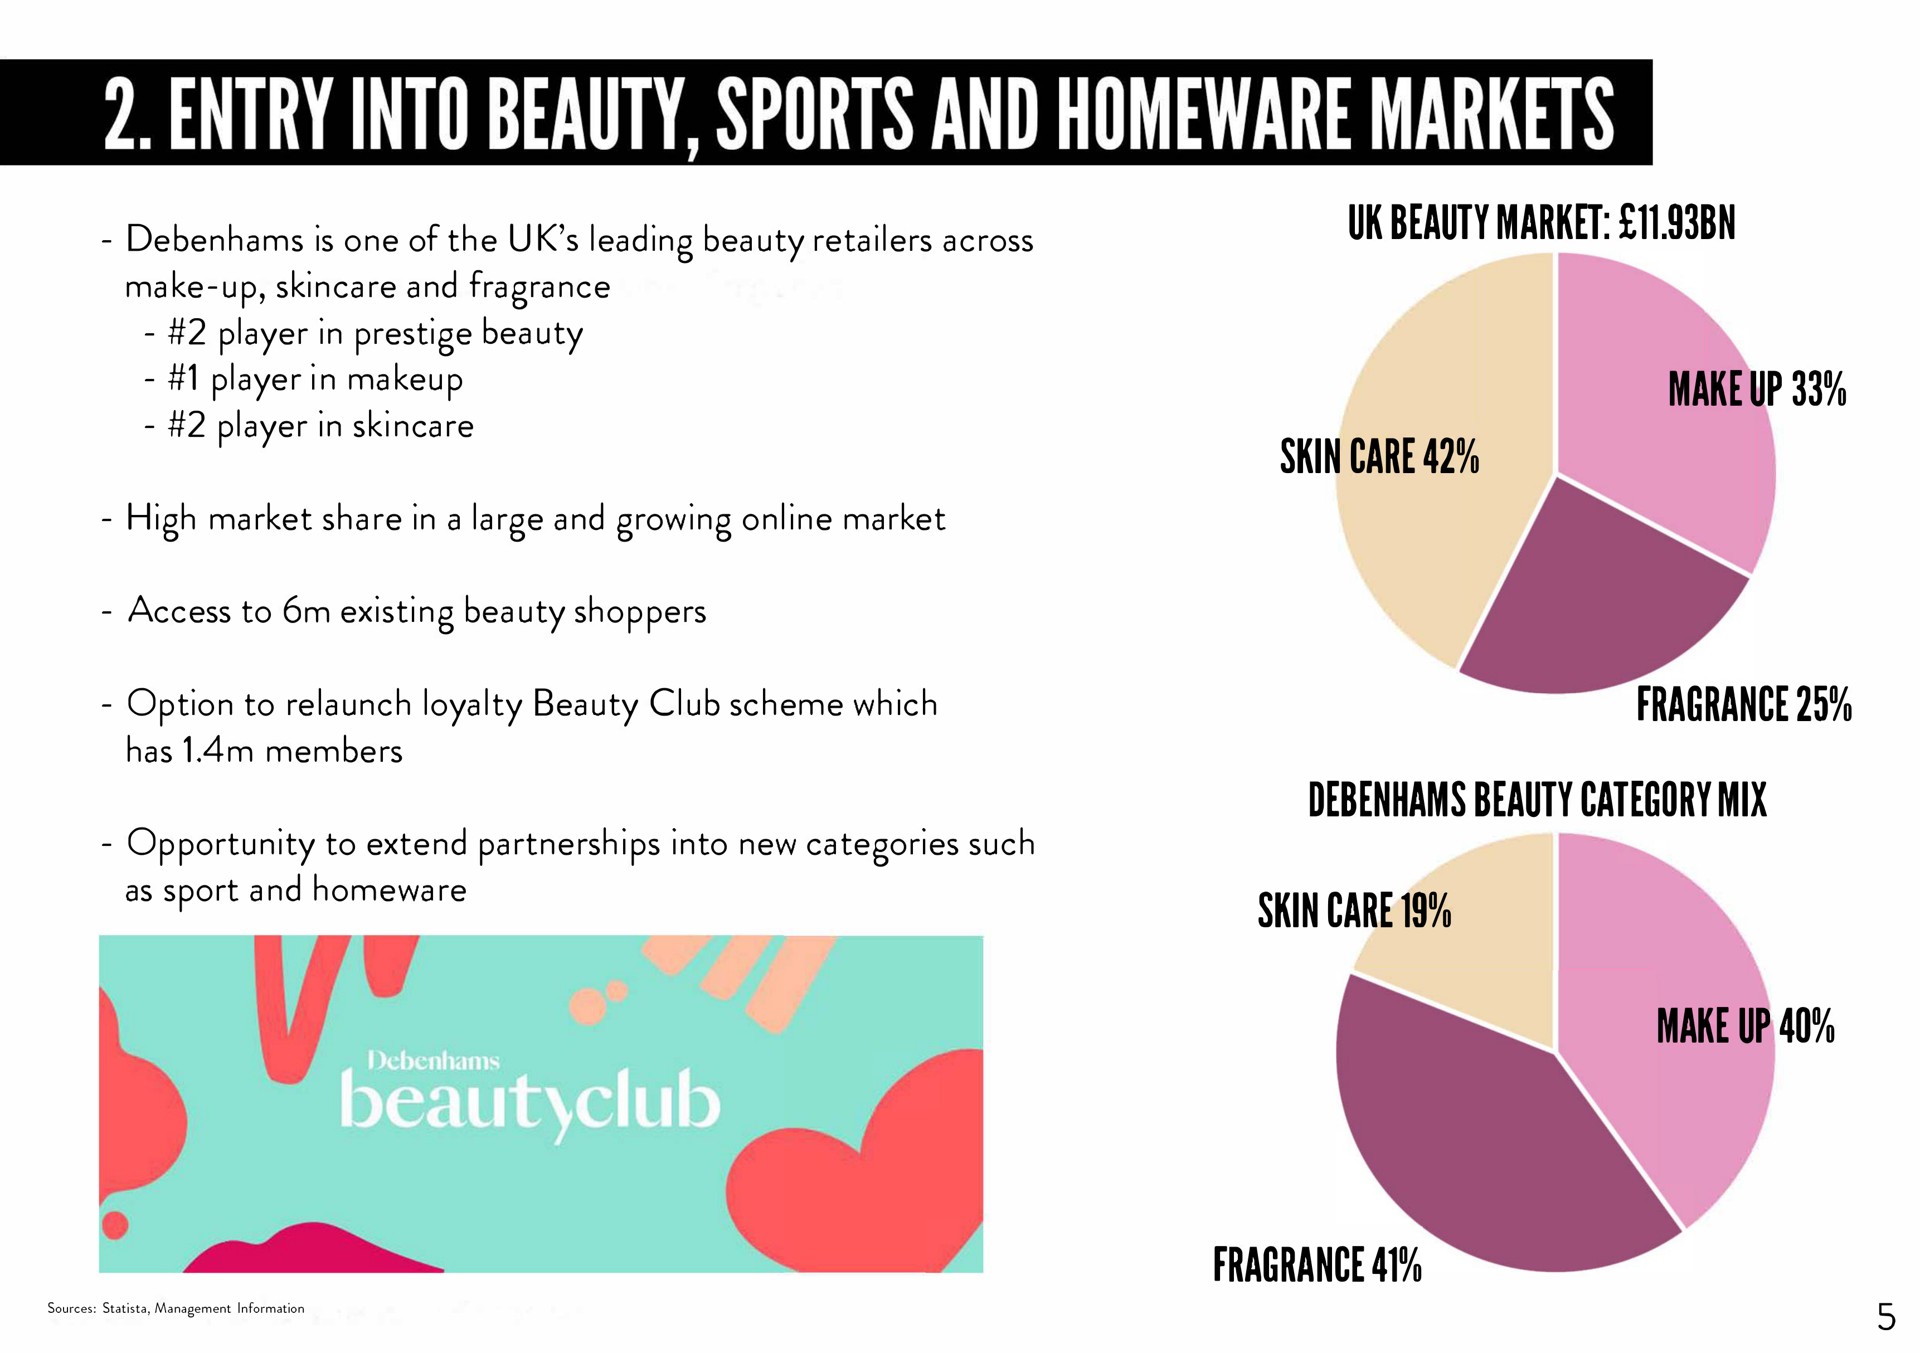 beauty market make up skin care fragrance beauty mix category skin care make up fragrance cas | Boohoo Group